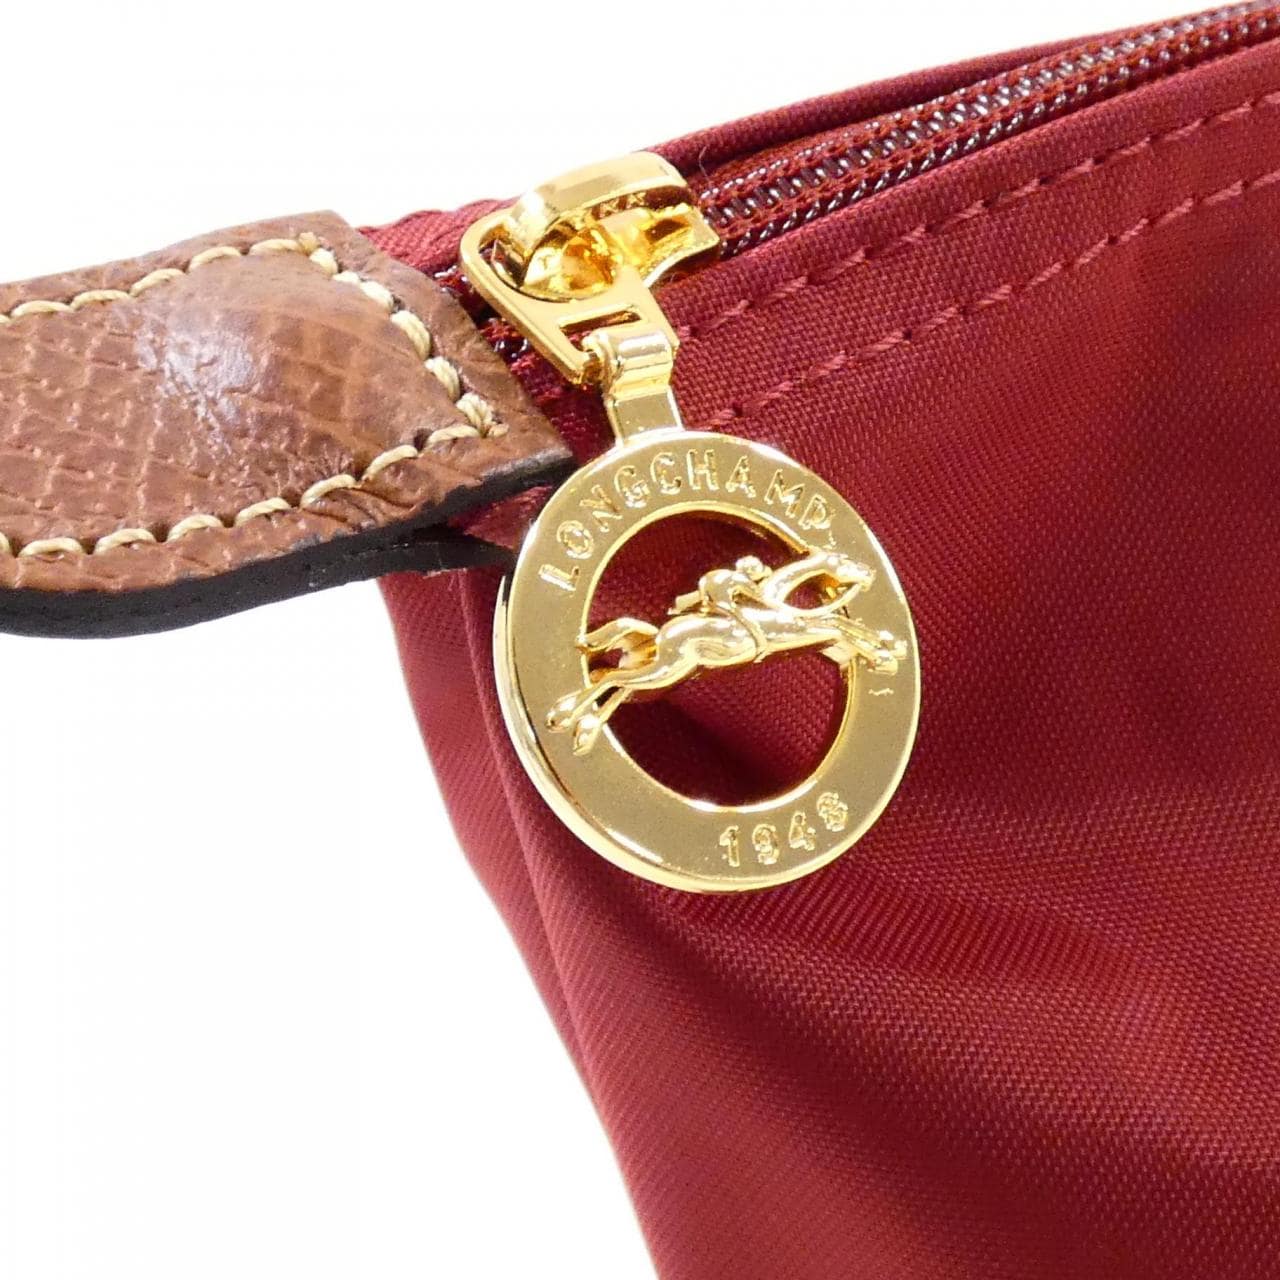 [新品] Longchamp Le Pliage 2605 089 單肩包